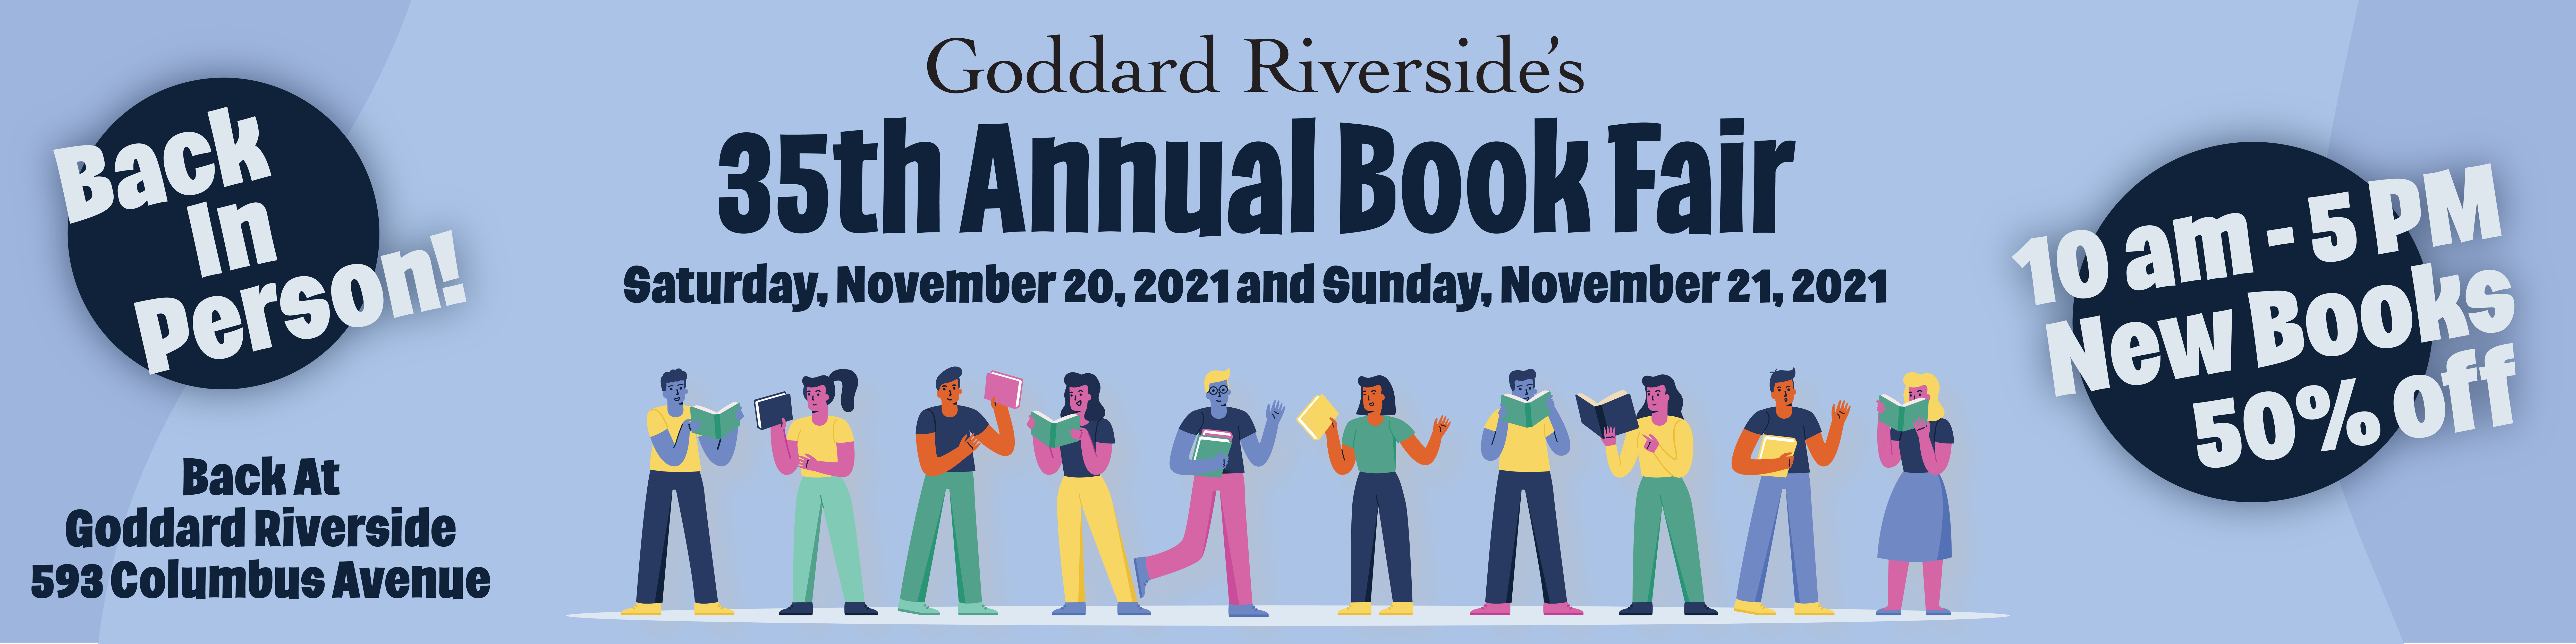 Goddard Riverside 35th Annual Book Fair Saturday November 20 and Sunday November 21, 2021. 10 AM-5 PM new books 50% off. Back in person! Back at Goddard Riverside 593 Columbus Ave.